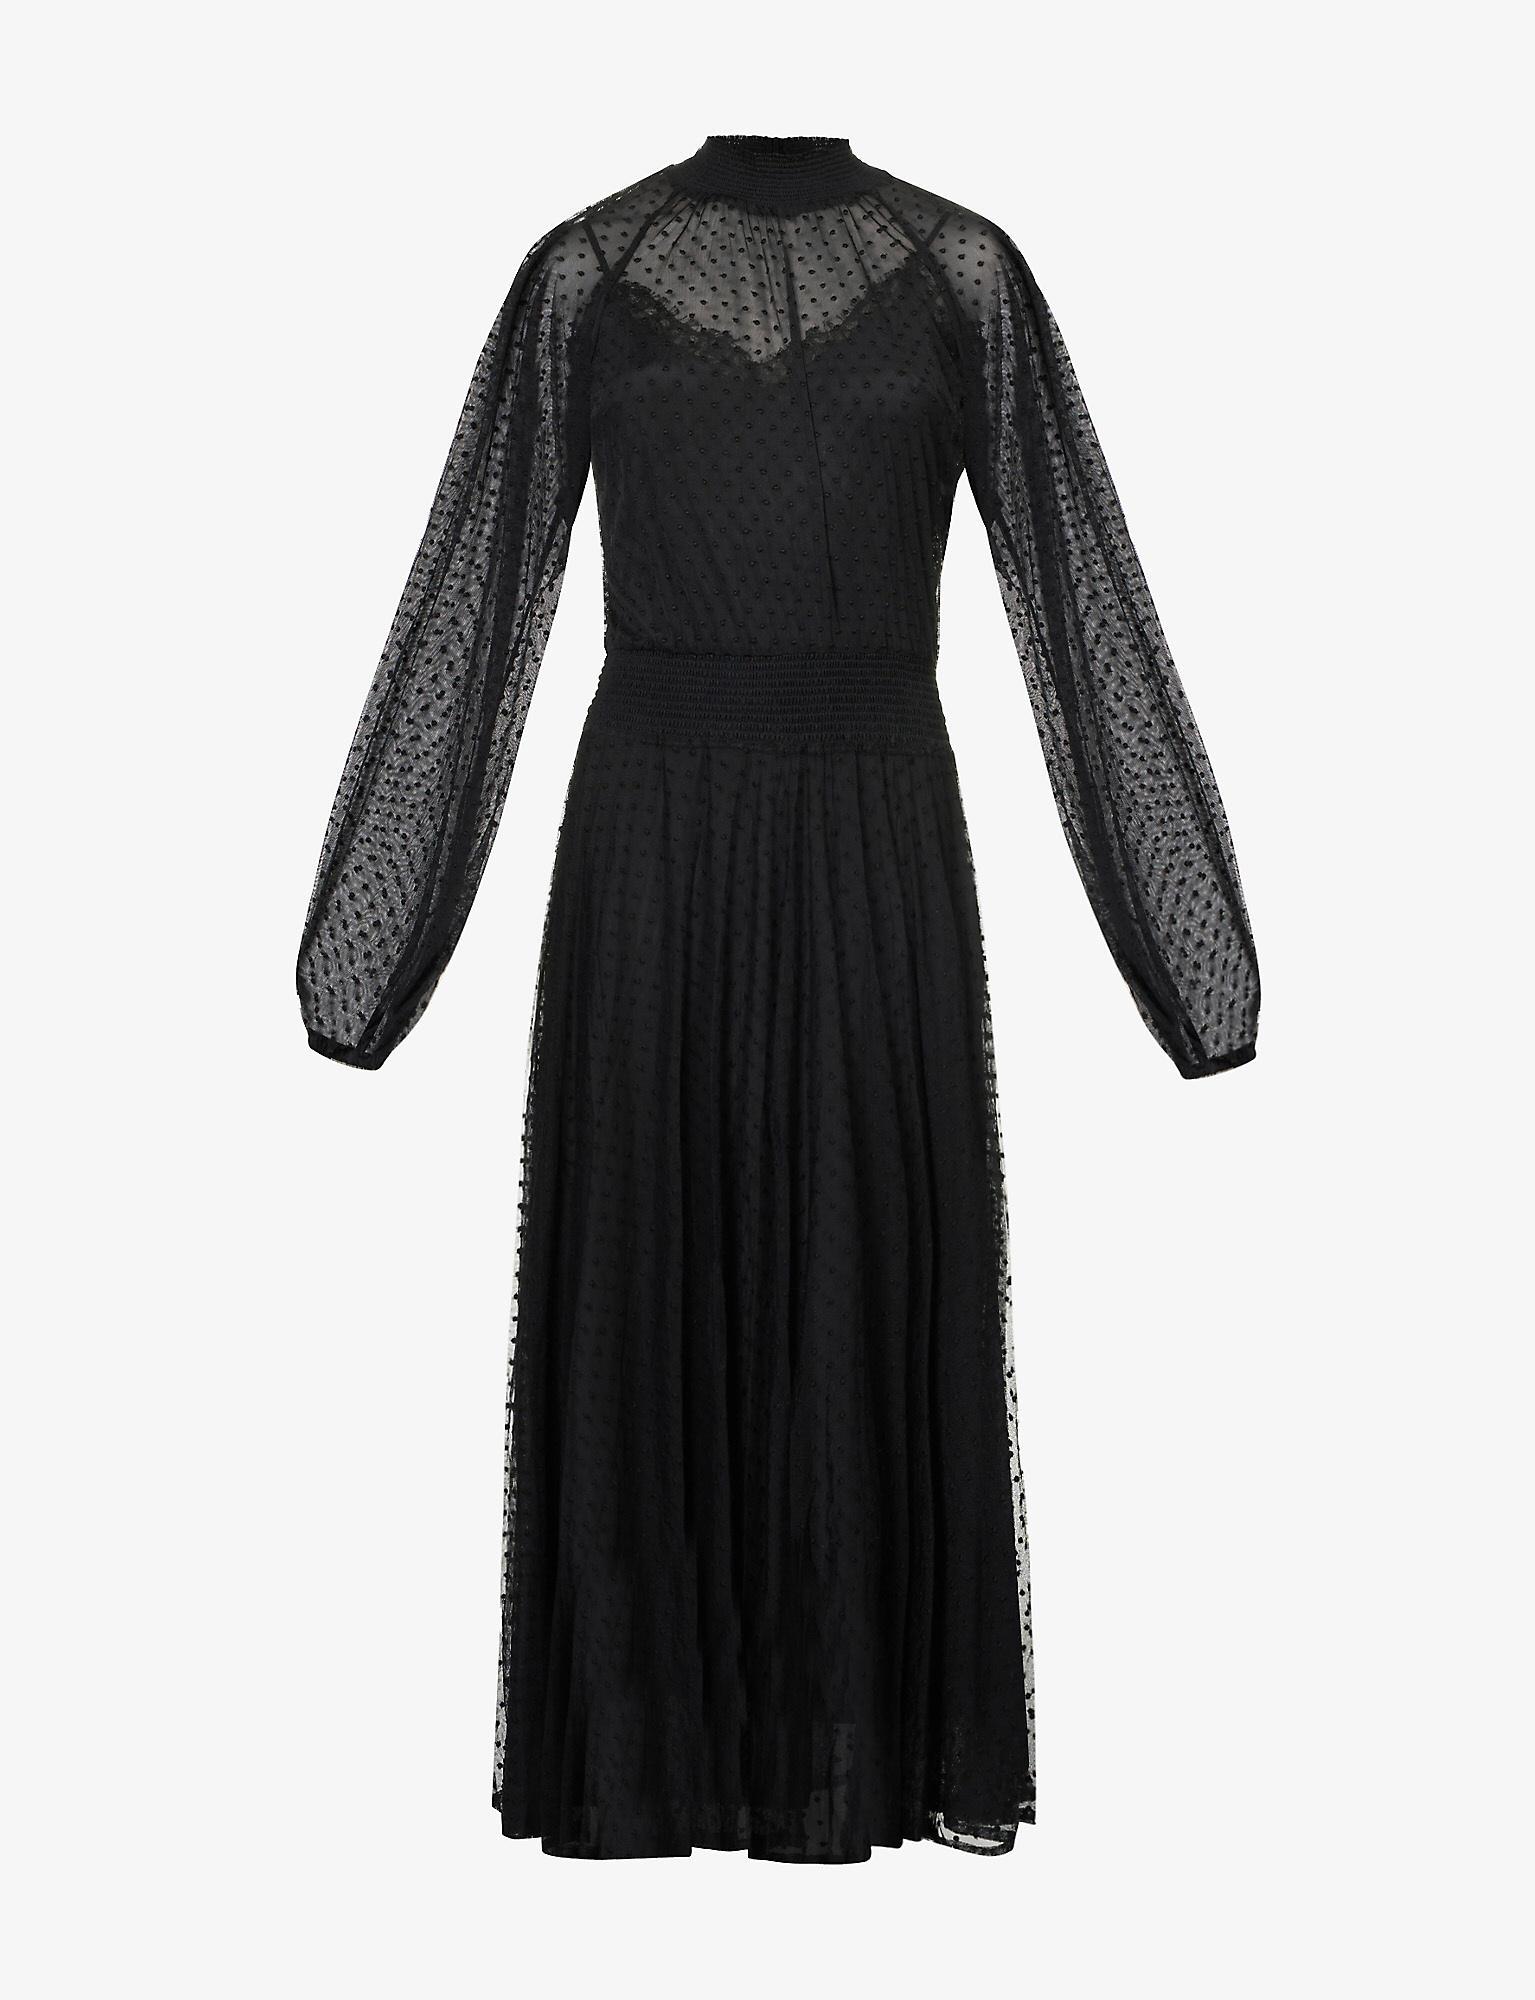 Polo Ralph Lauren Polka Dot Sheer Sleeve Cotton Maxi Dress In Black Lyst